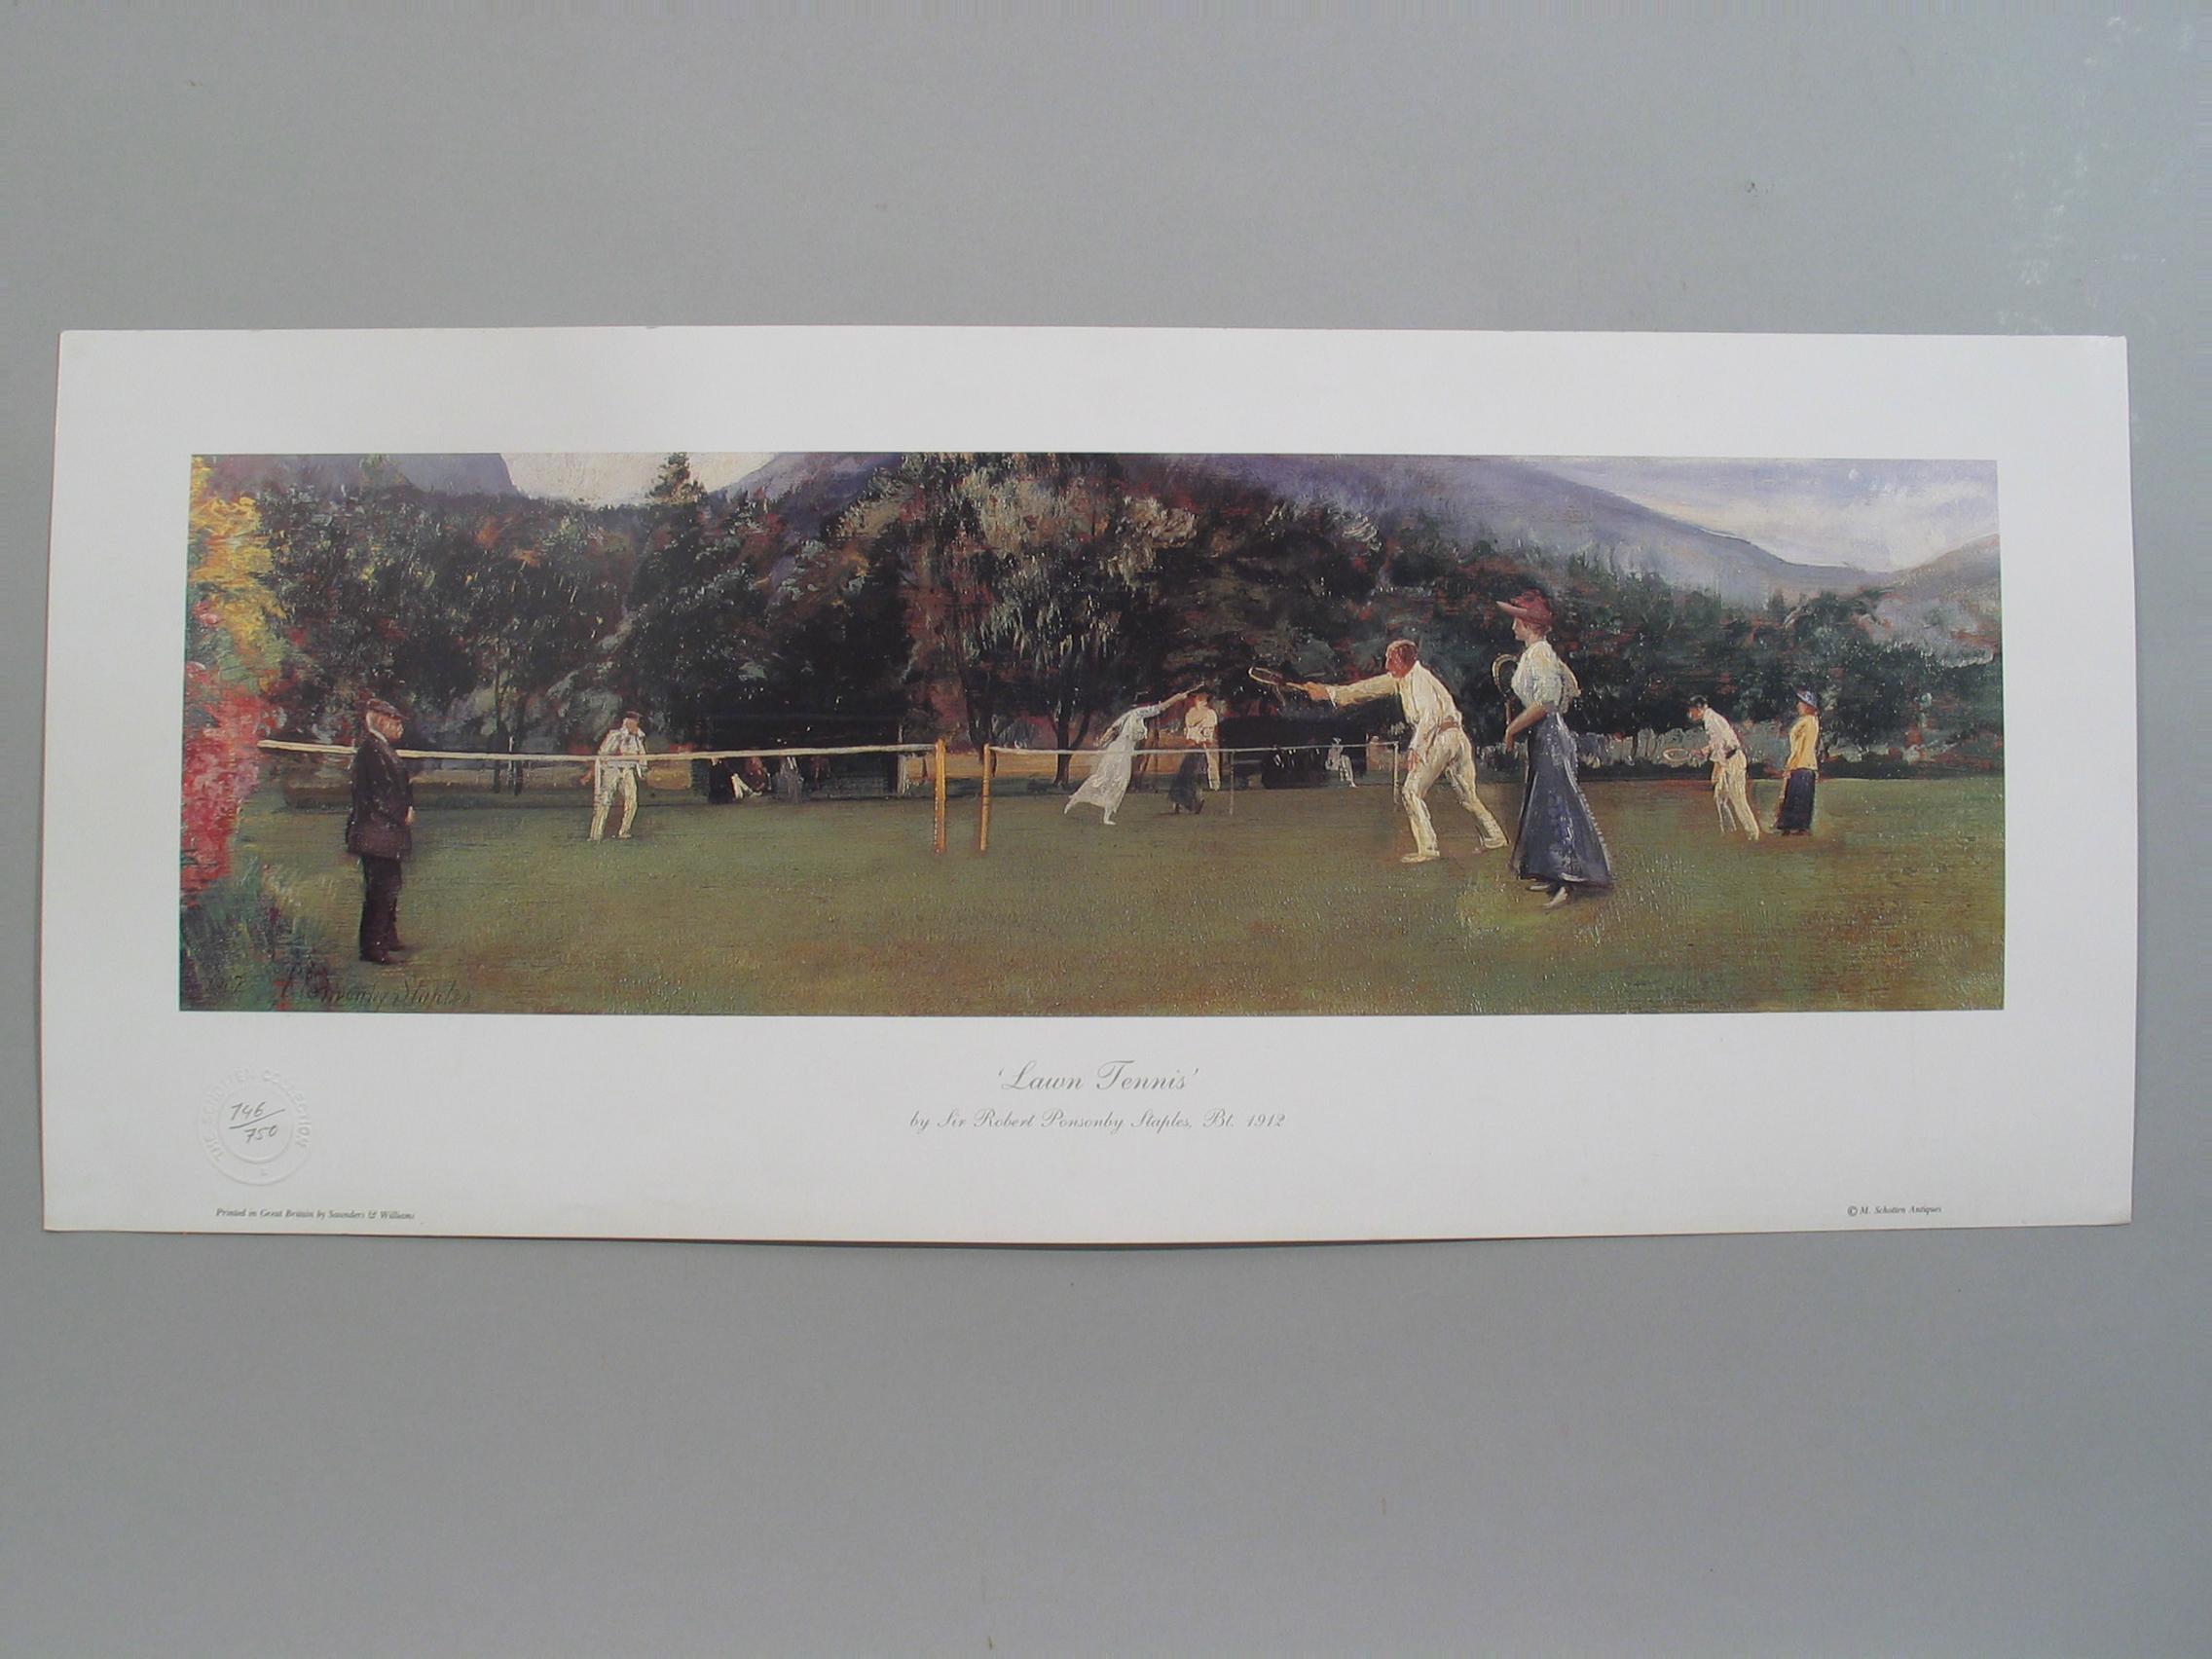 British Lawn Tennis, Ltd. Edition Print, 1912 Newcastle Co. Down, Ireland For Sale